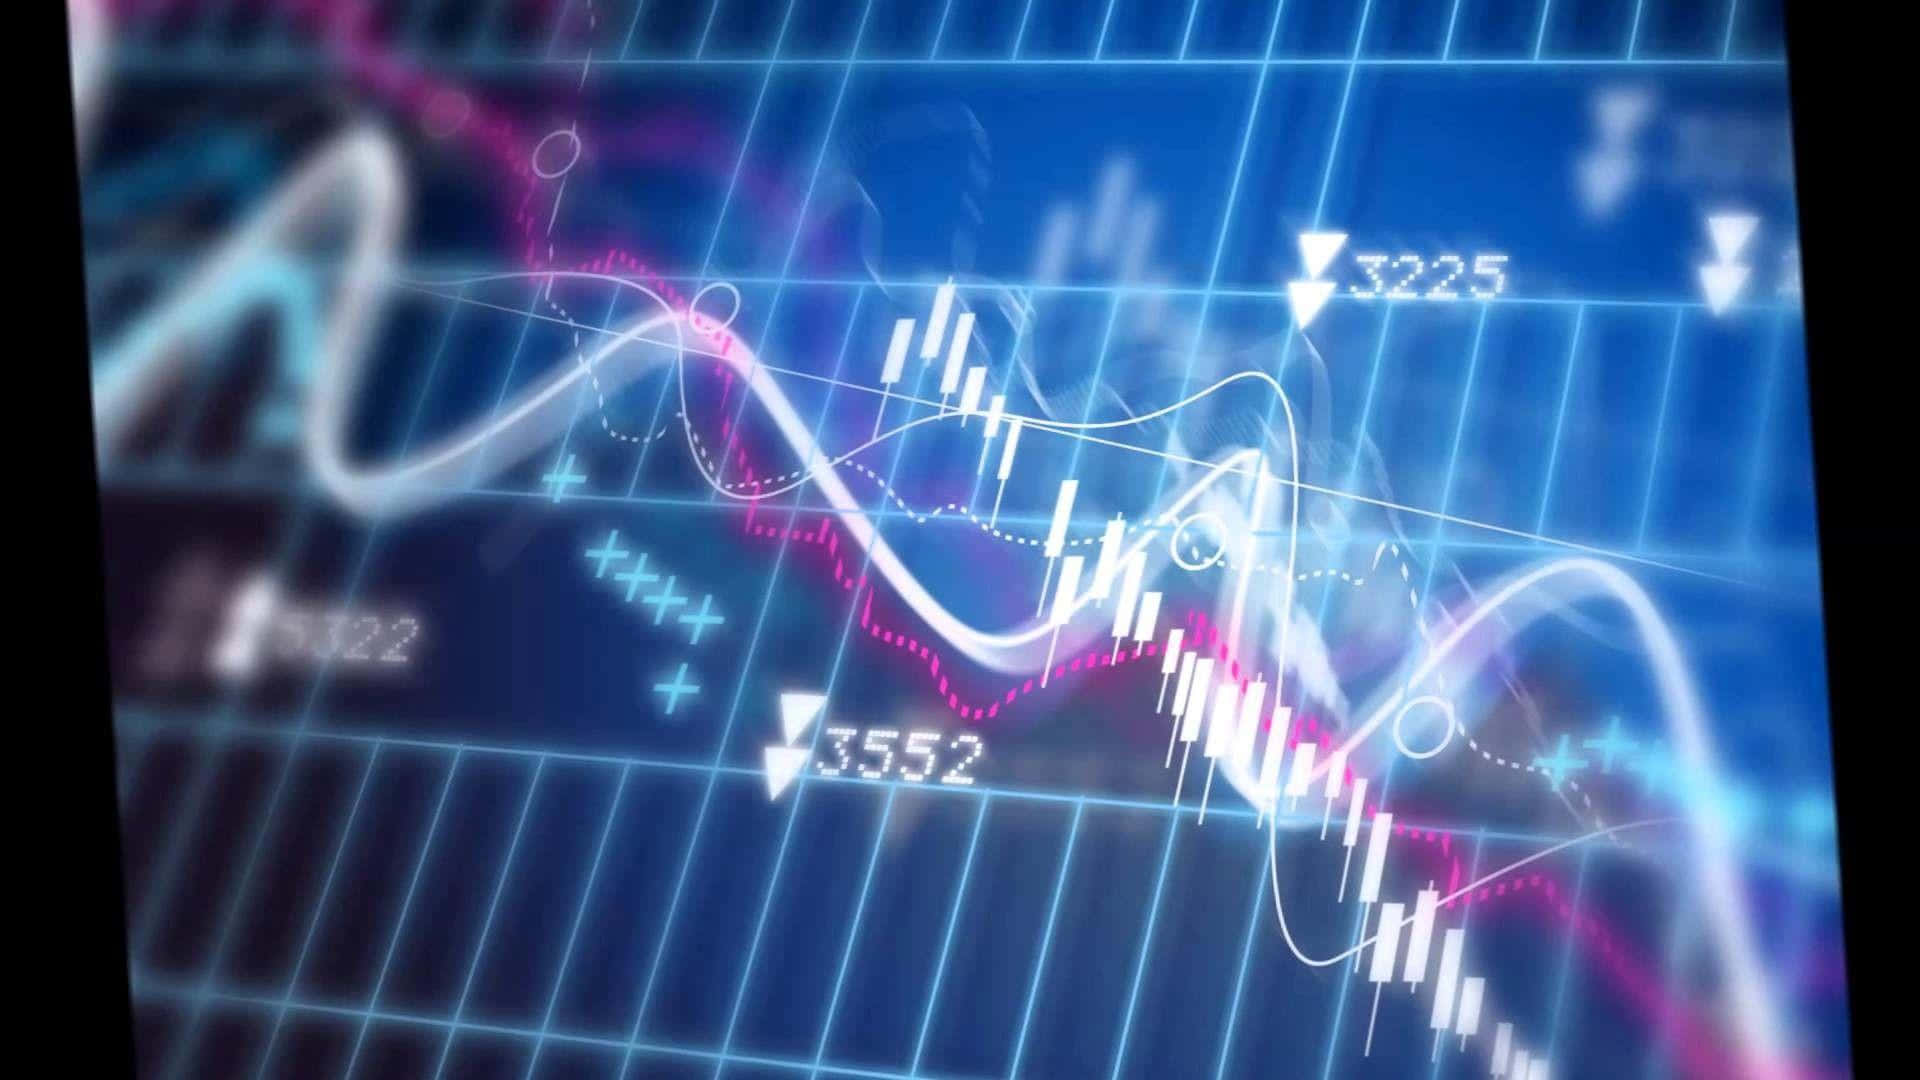 Abstract Stock Market Analysis Wallpaper